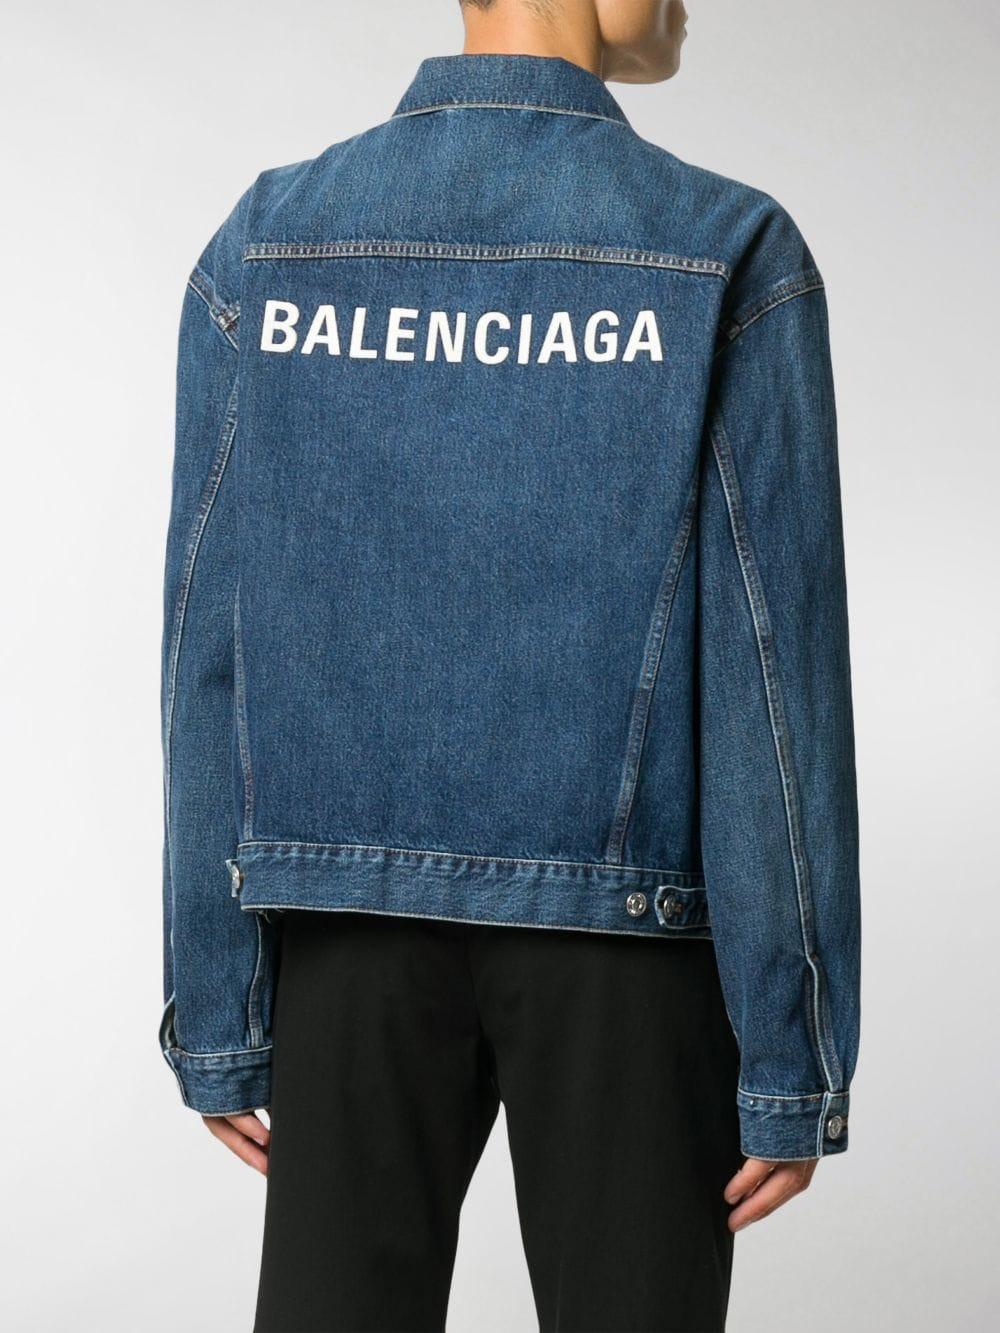 Balenciaga Logo-embroidered Denim Jacket in Blue for Men - Lyst